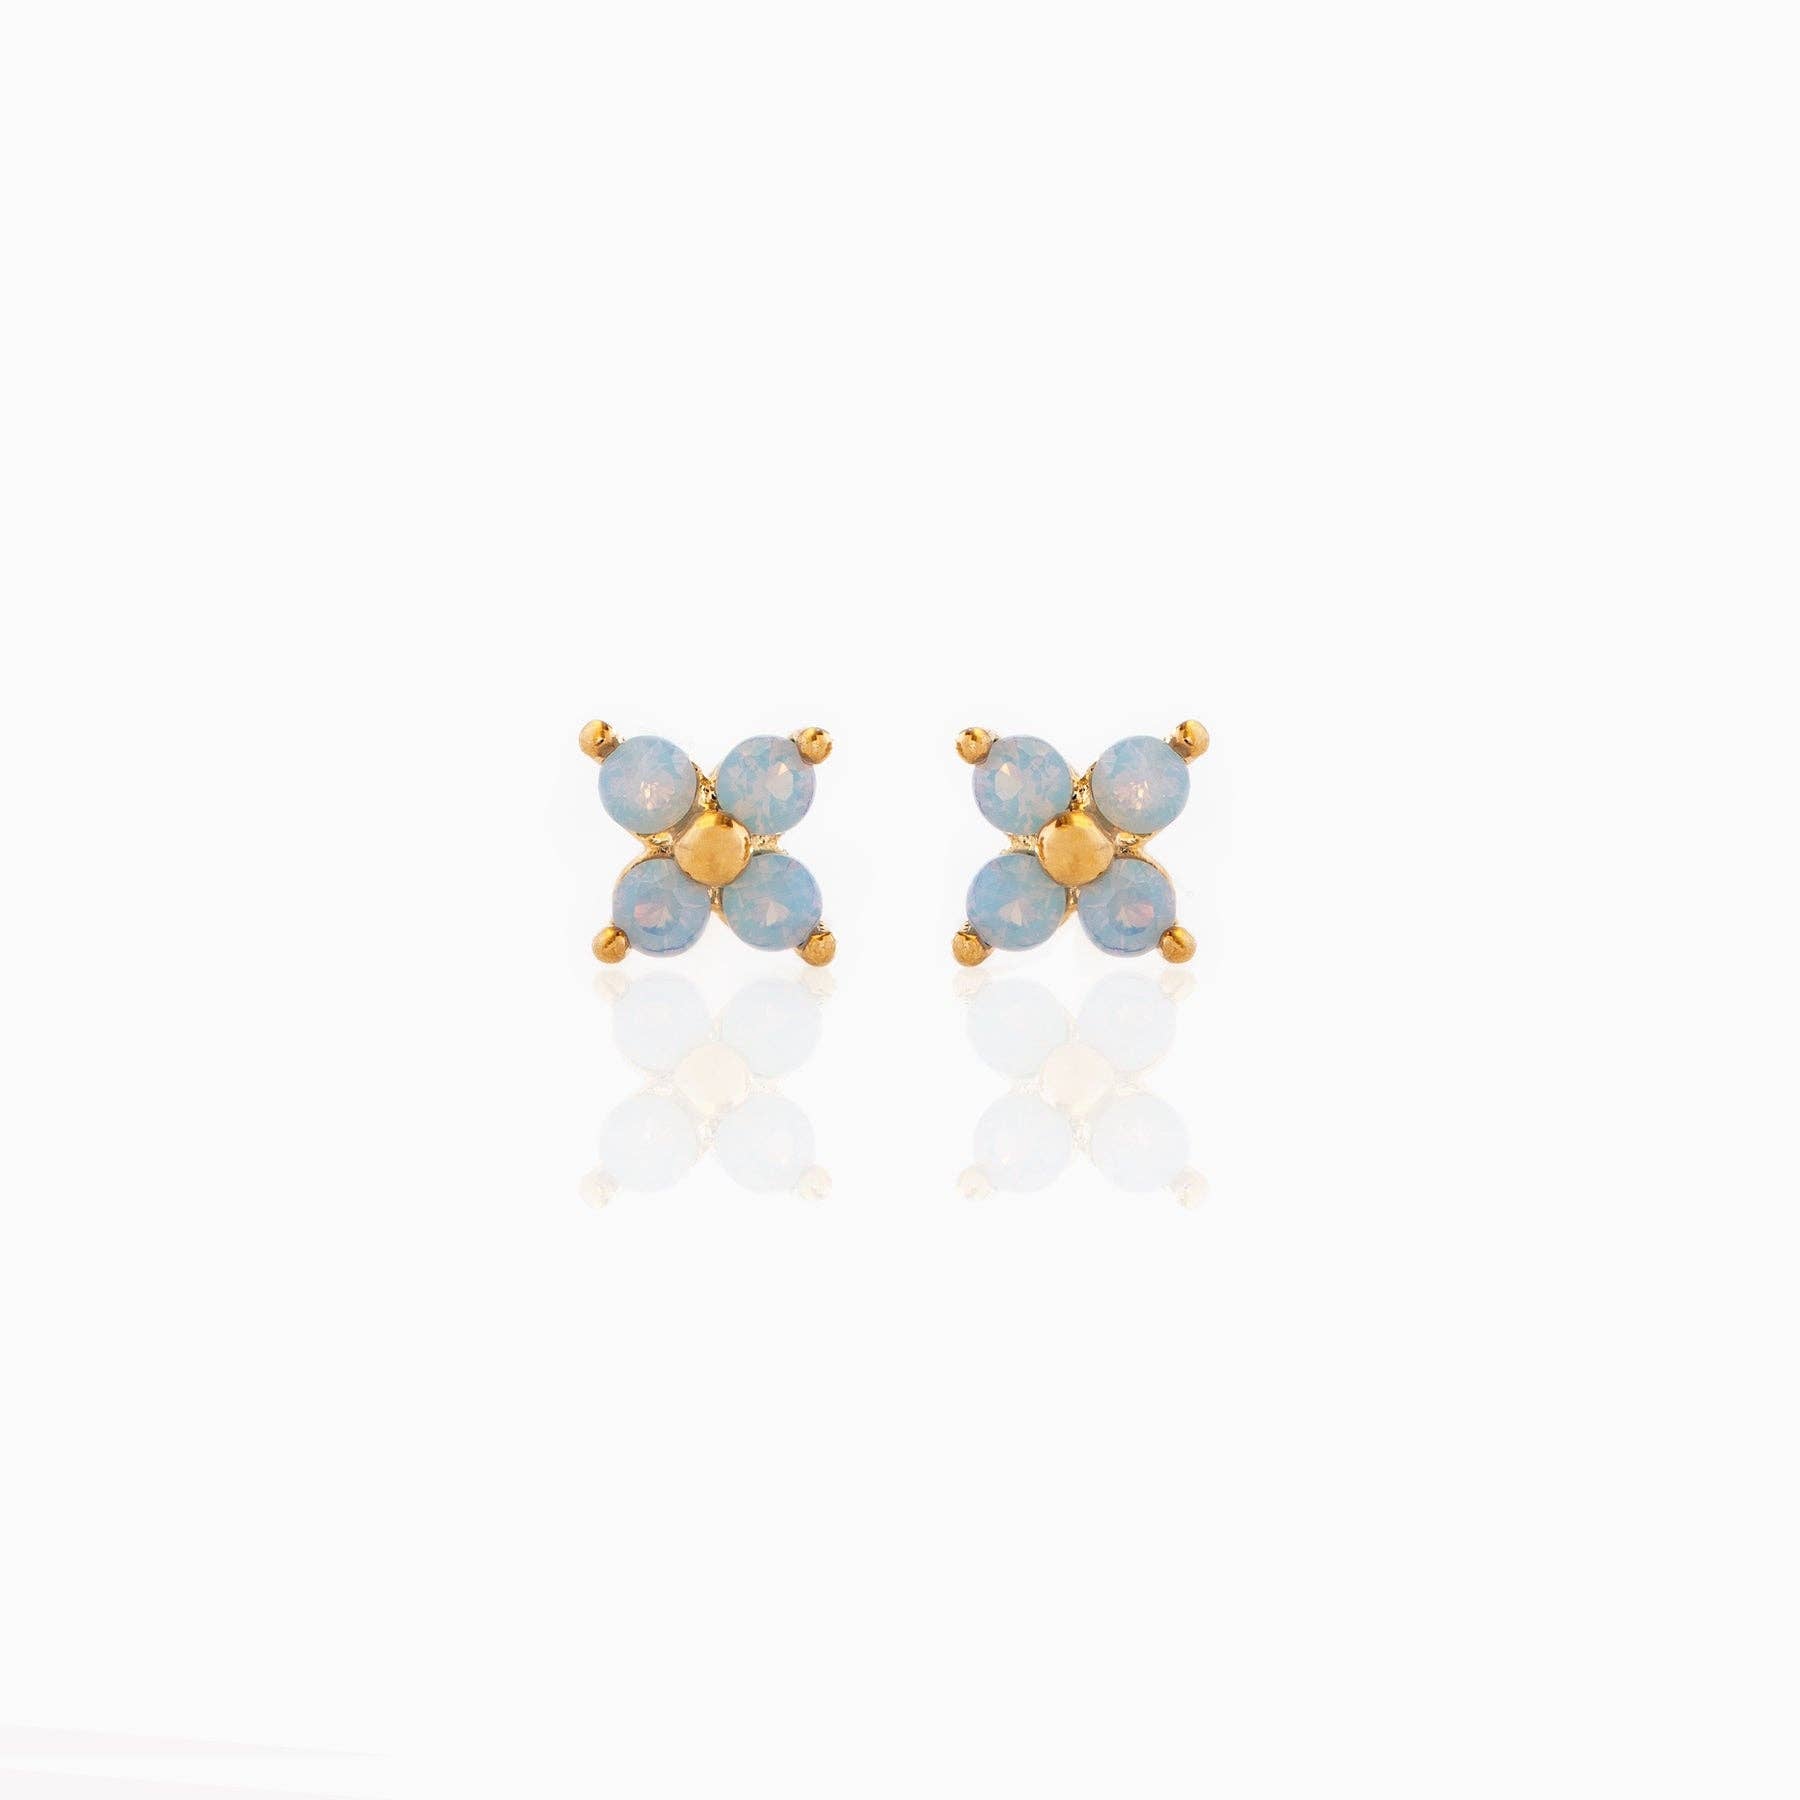 Teeny Tiny Blue Blossom Stud Earrings - Abigail Fox Designs